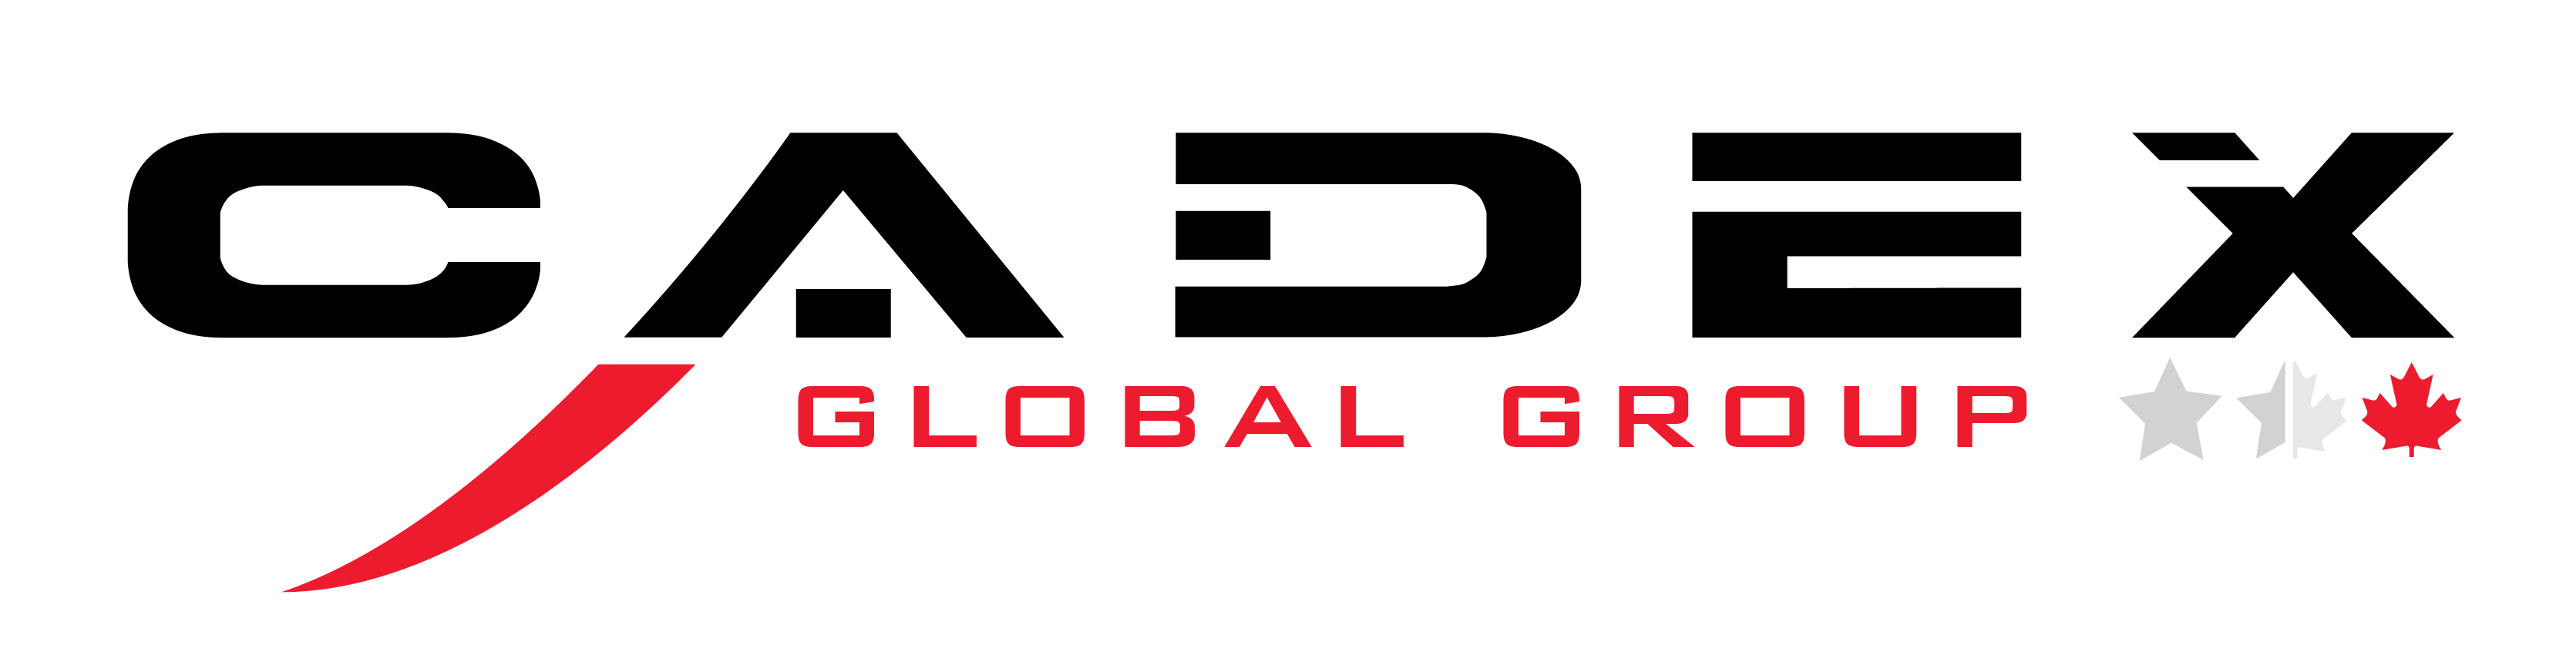 Cadex Global Group Logo